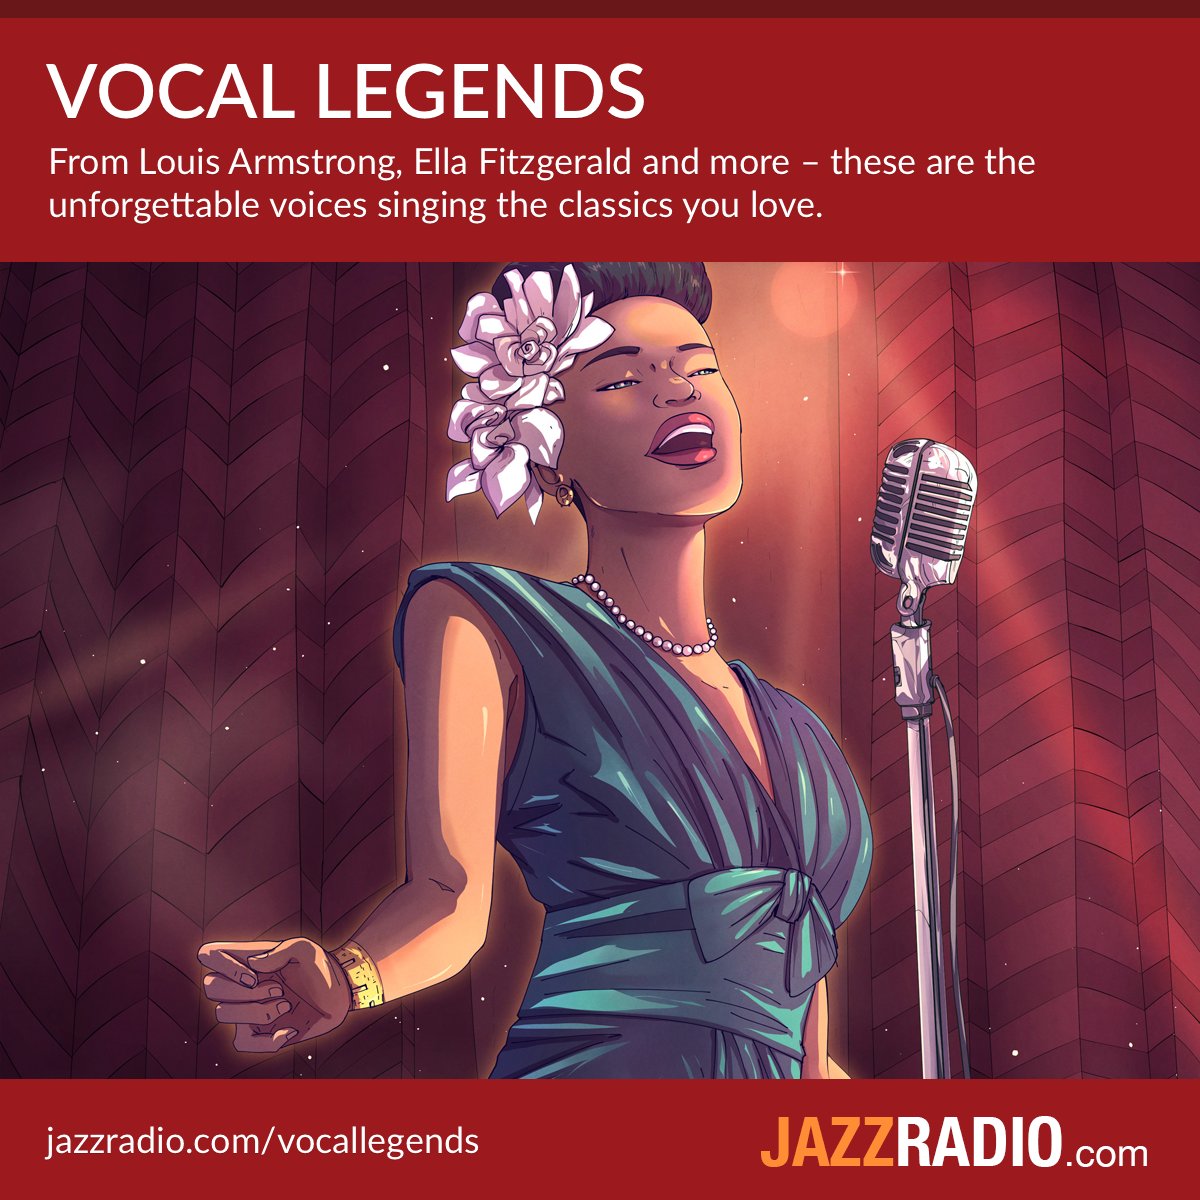 #VocalLegends – unforgettable voices singing the classics you love. Tune in and enjoy beloved jazz songs from #EllaFitzgerald, #BillieHoliday, #SarahVaughan, #LouisArmstrong, and many more:
JAZZRADIO.com/vocallegends

•

#VocalJazz #MondayMotivation #JazzLegends #JazzRadio #Jazz